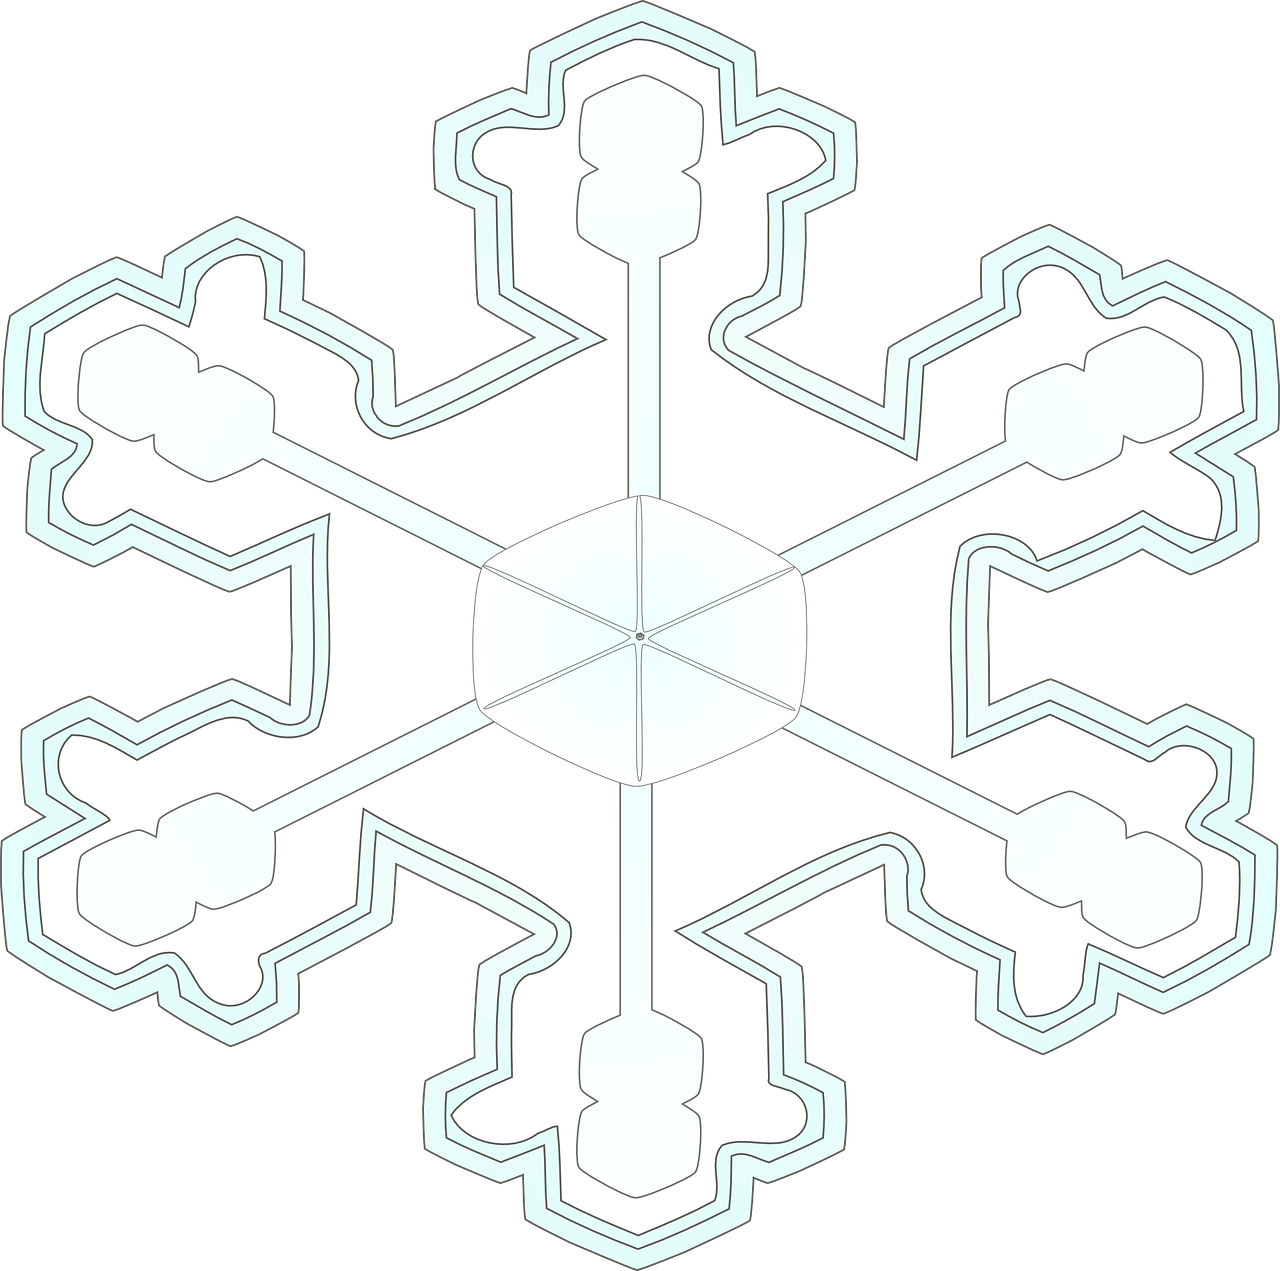 snowflake blue crystal free photo